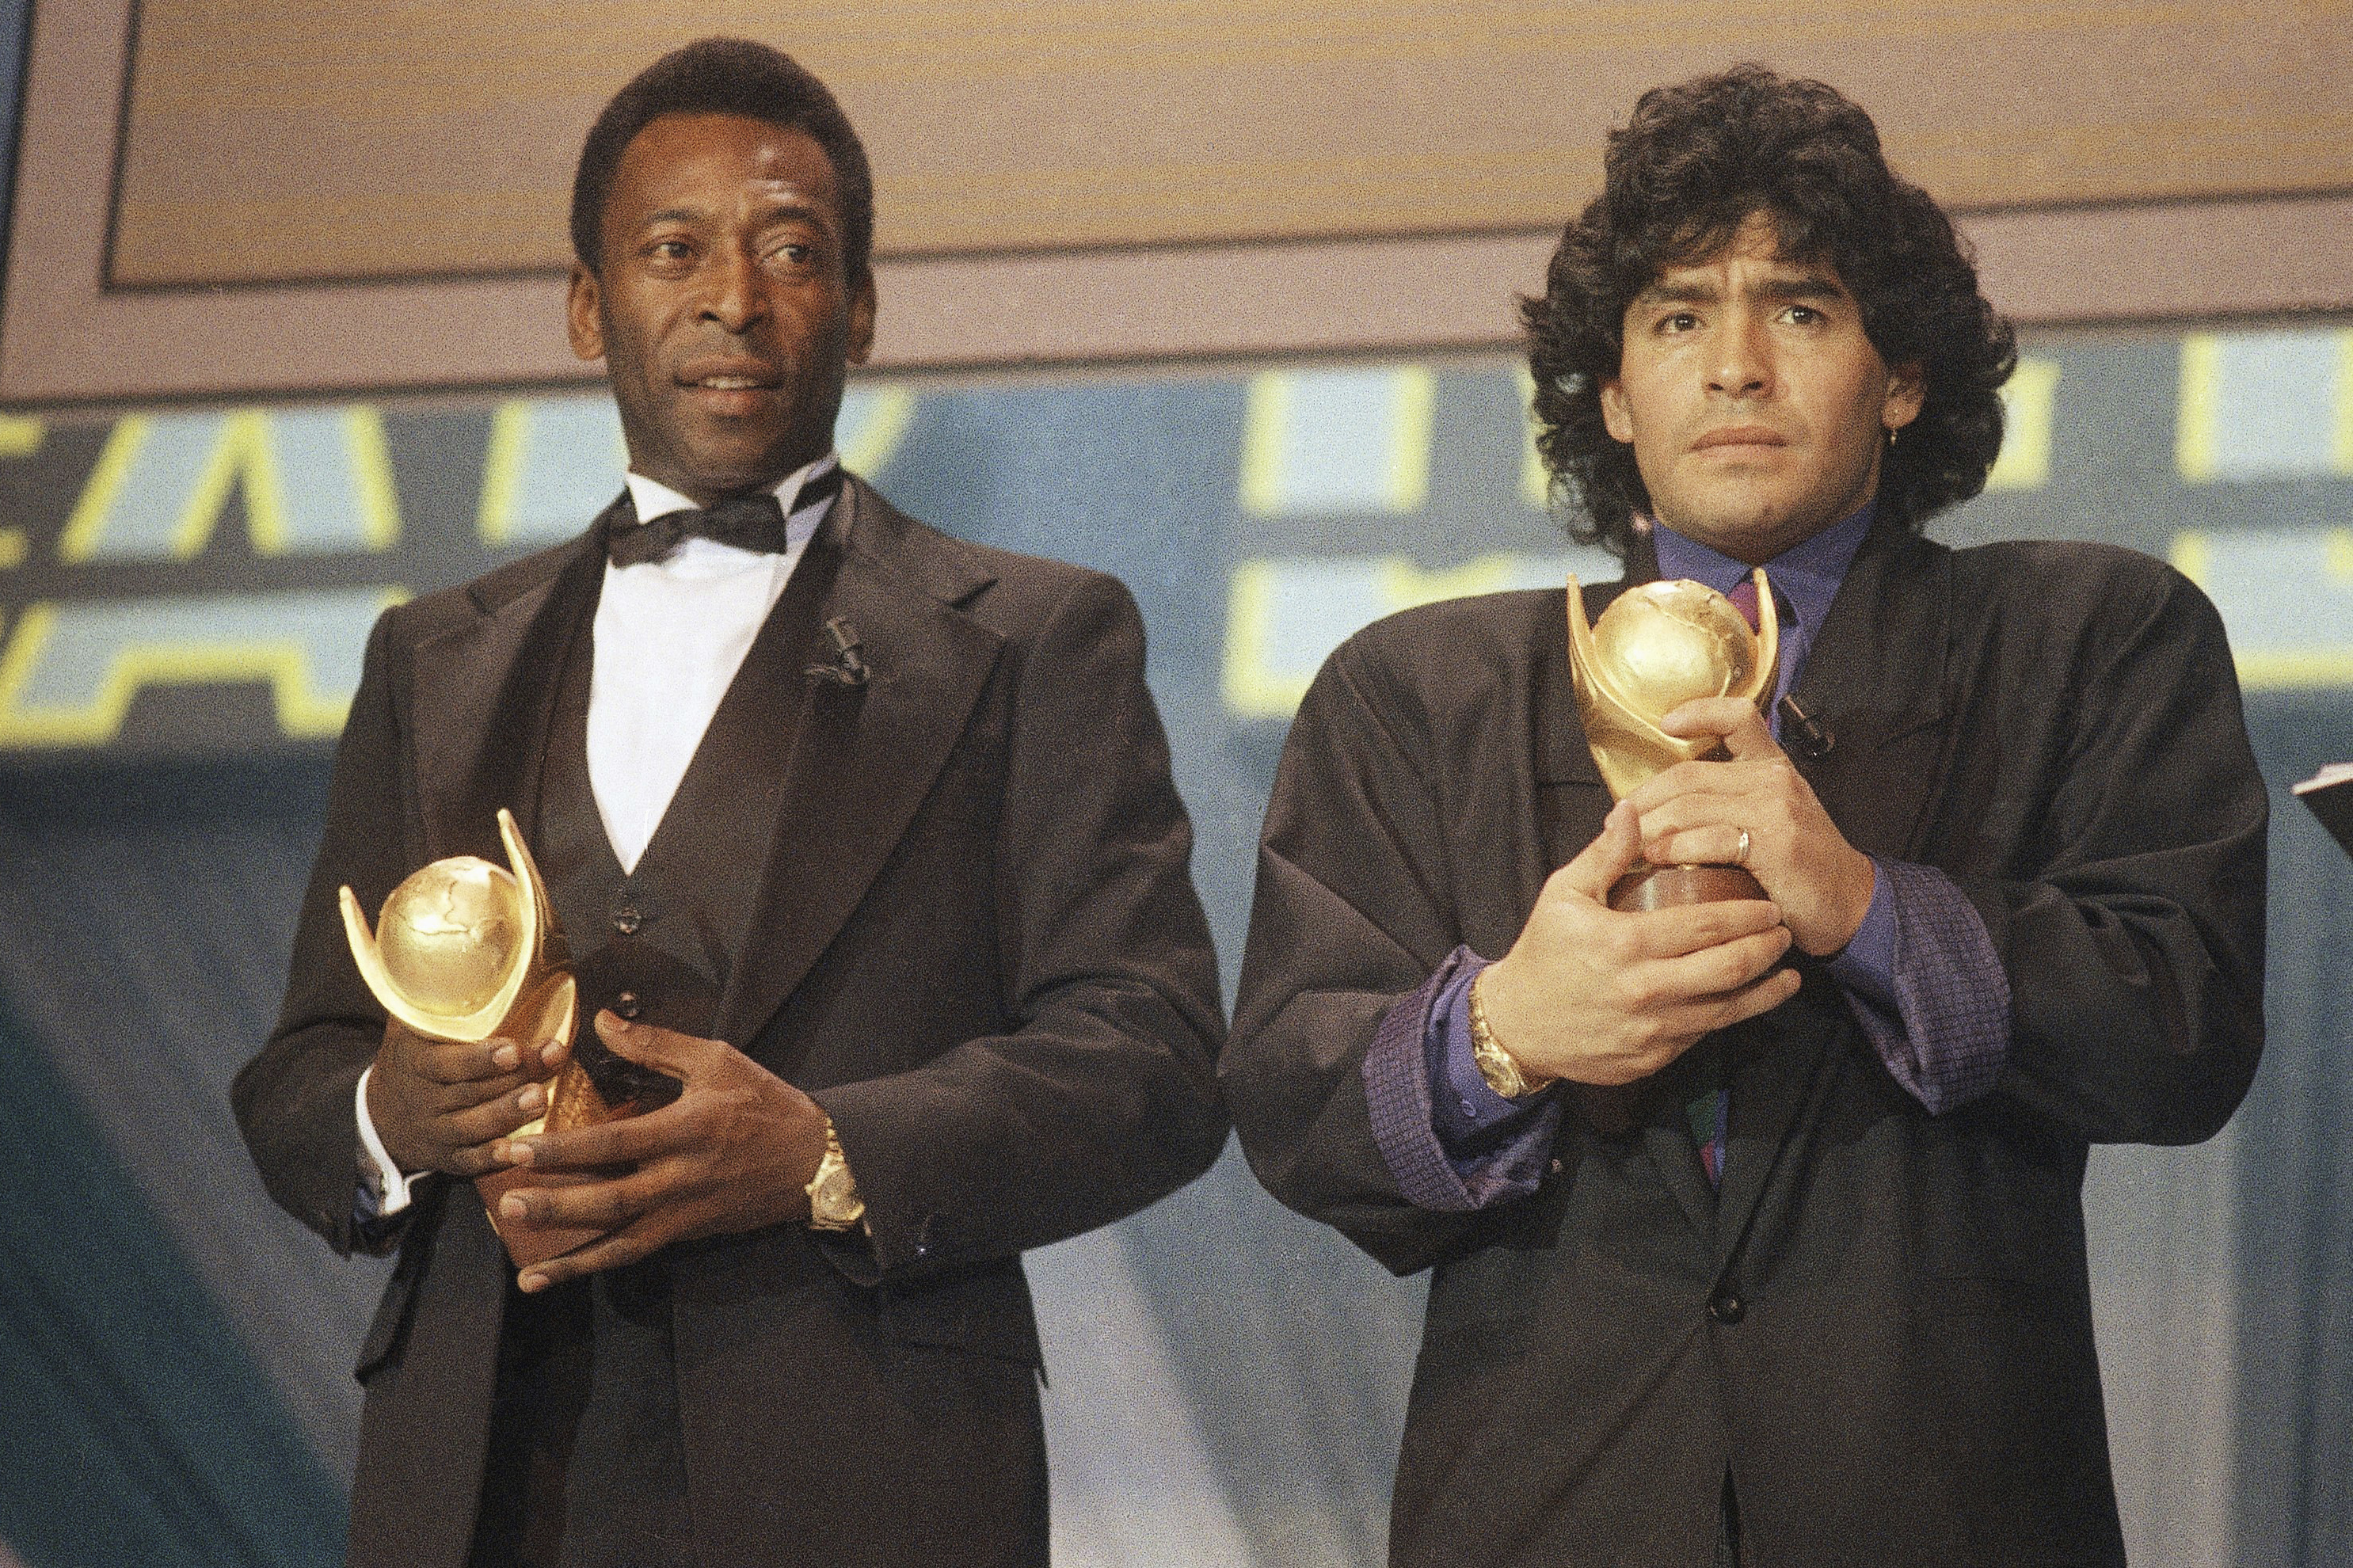 Sportskeeda Football - Pele on Maradona's death back in 2020